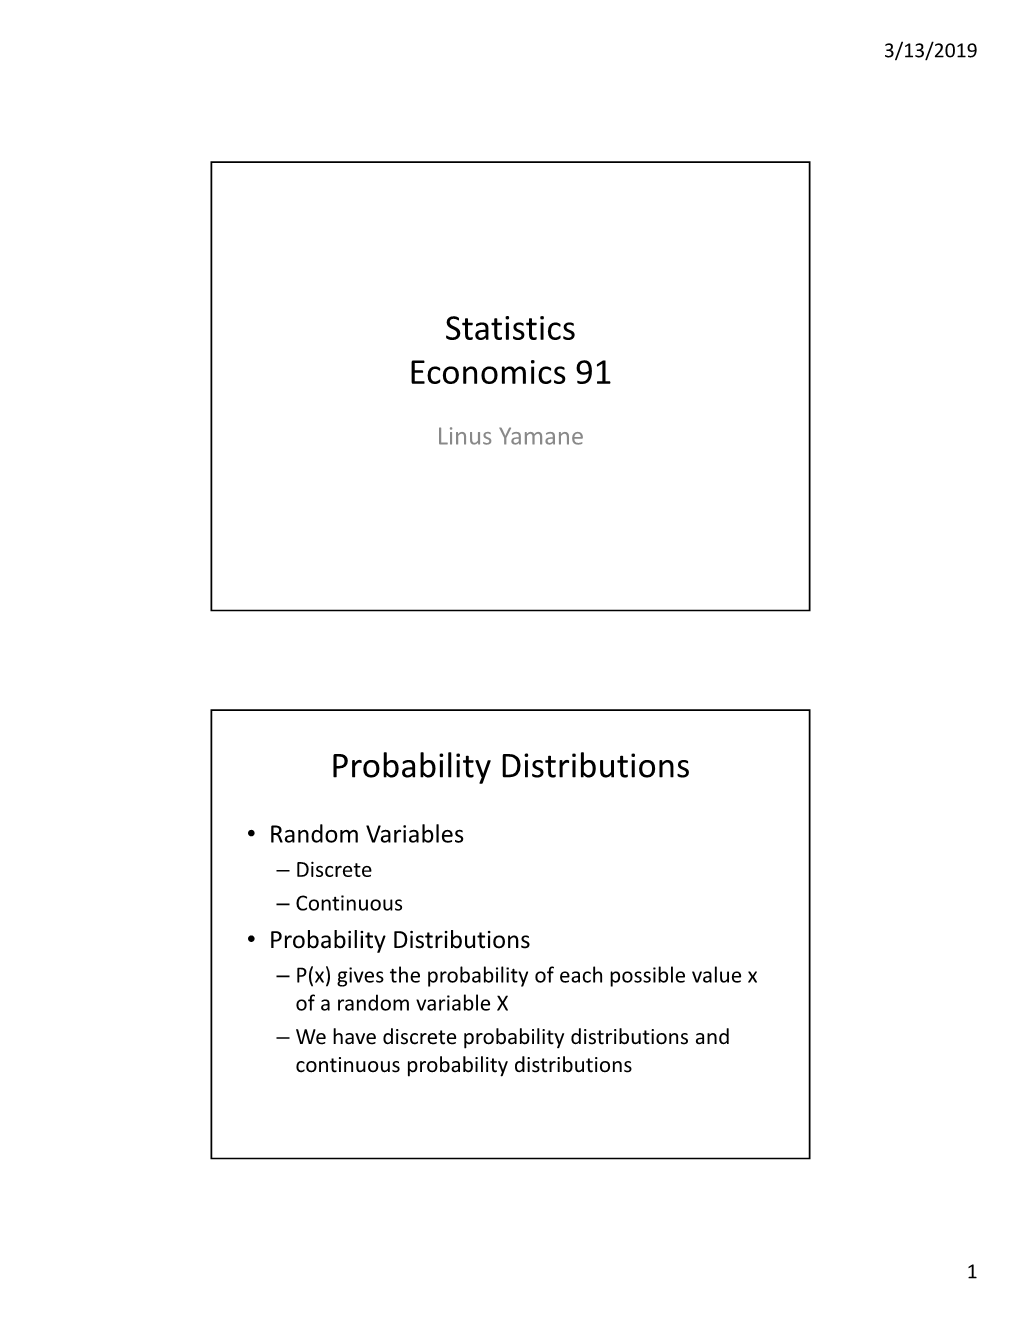 Statistics Economics 91 Probability Distributions